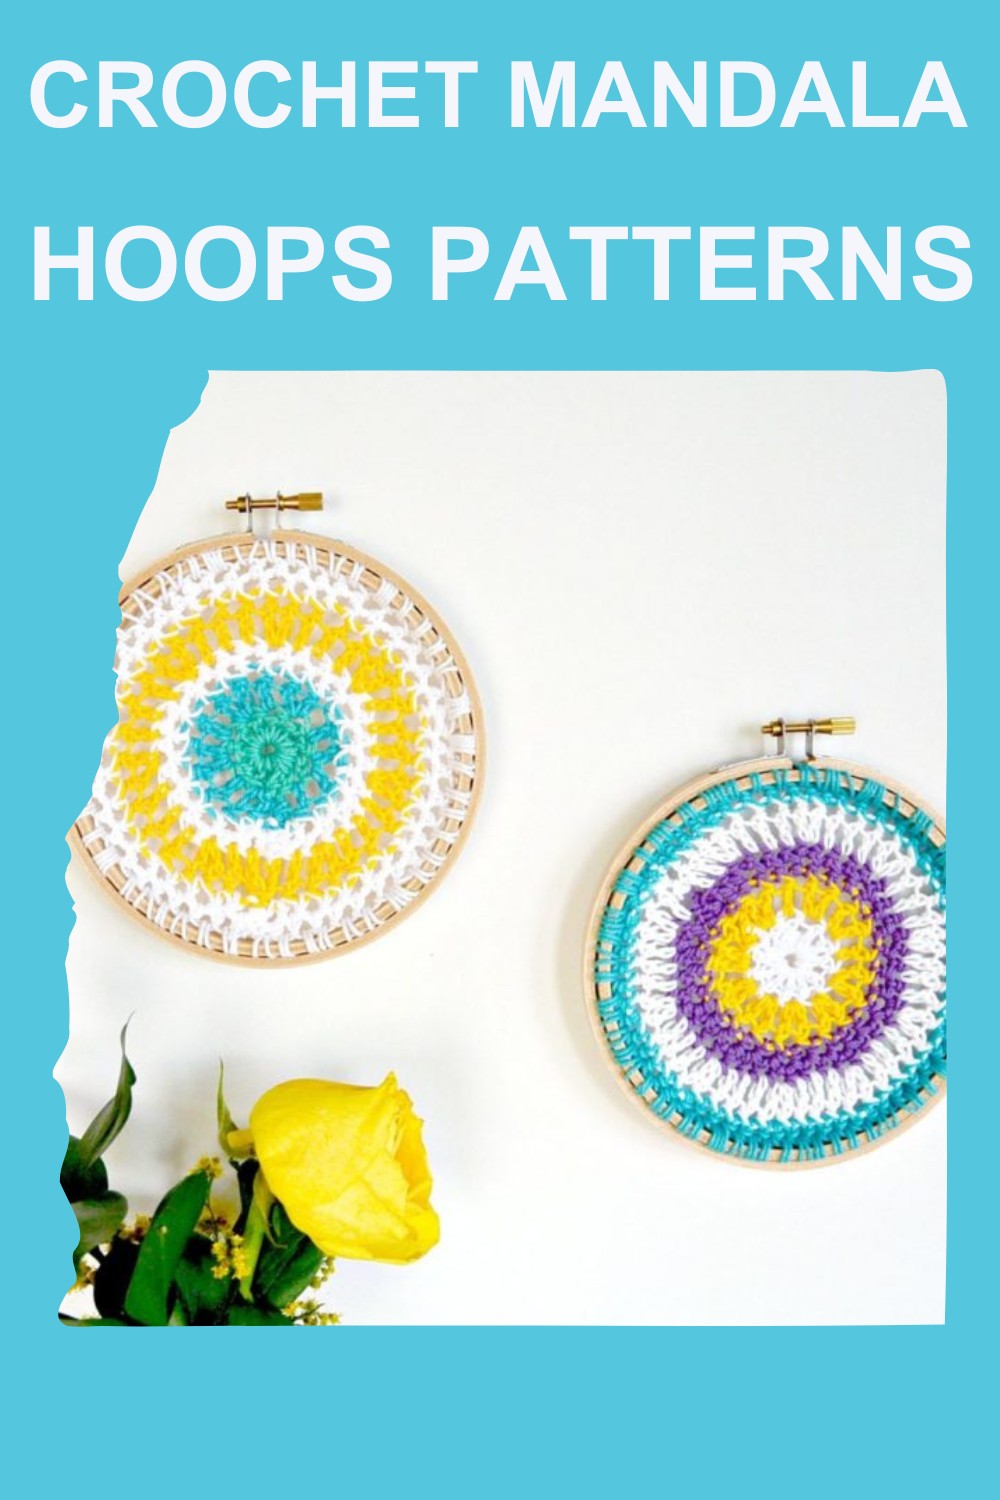 Crochet Mandala Hoops Patterns